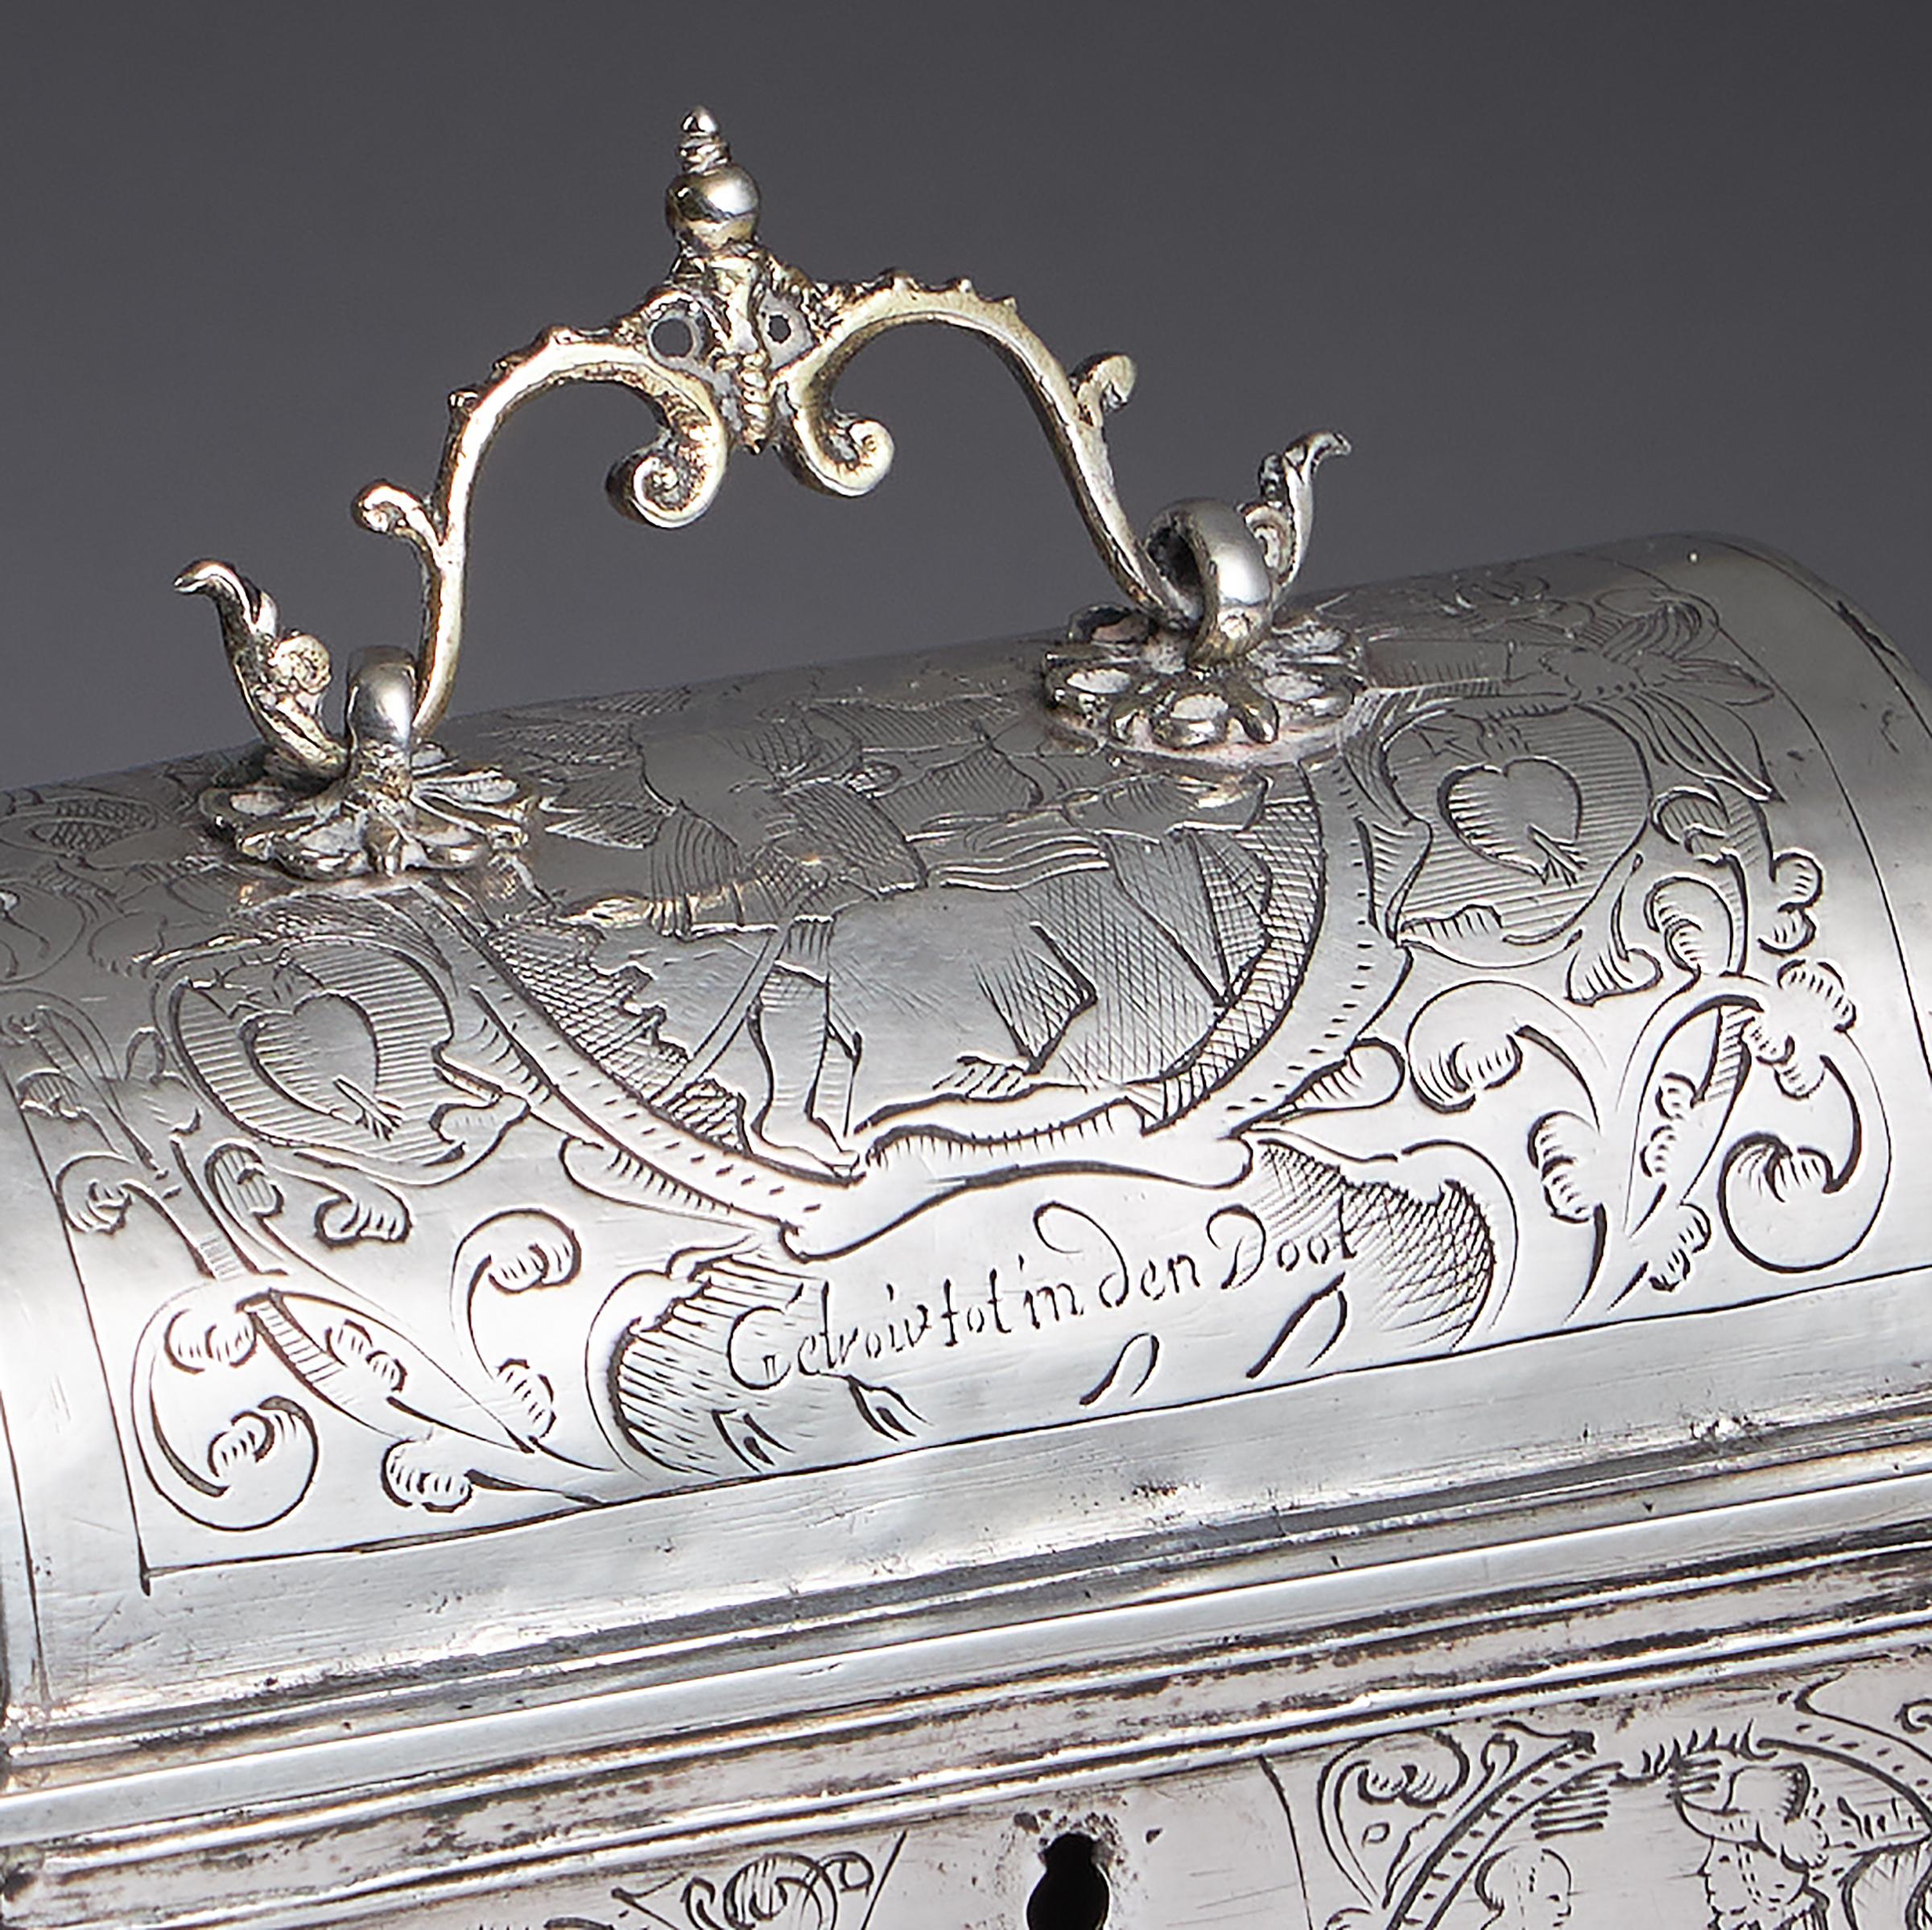 A museum-grade mid-17th century Dutch silver marriage casket or knottekistje, circa 1660 16